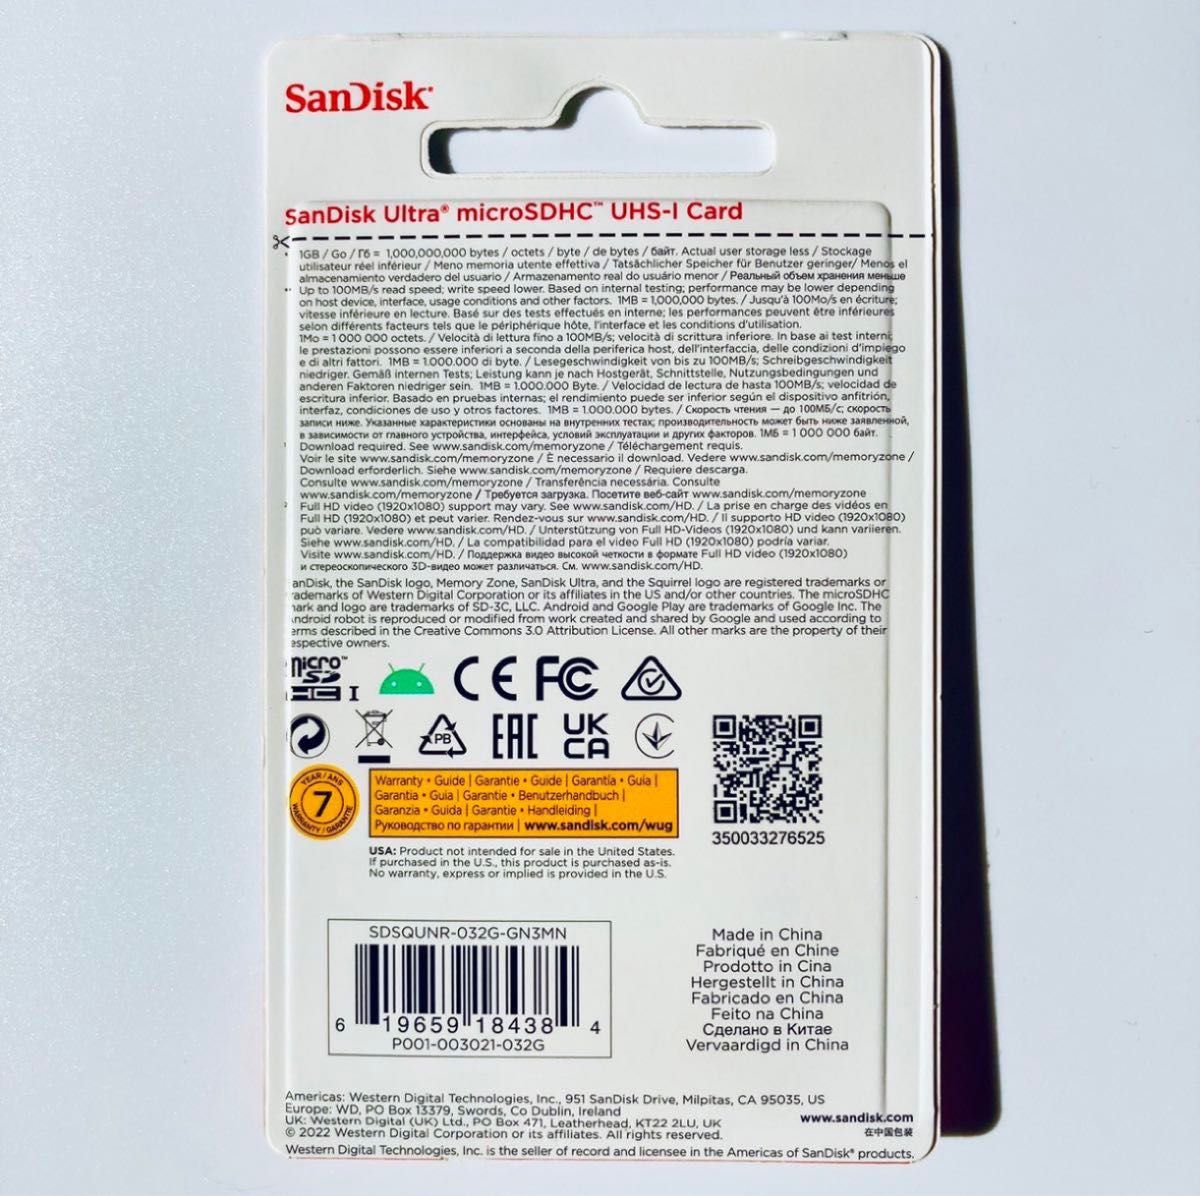 SanDisk micro SD 32GB マイクロ SD カード 1枚　100MB/秒